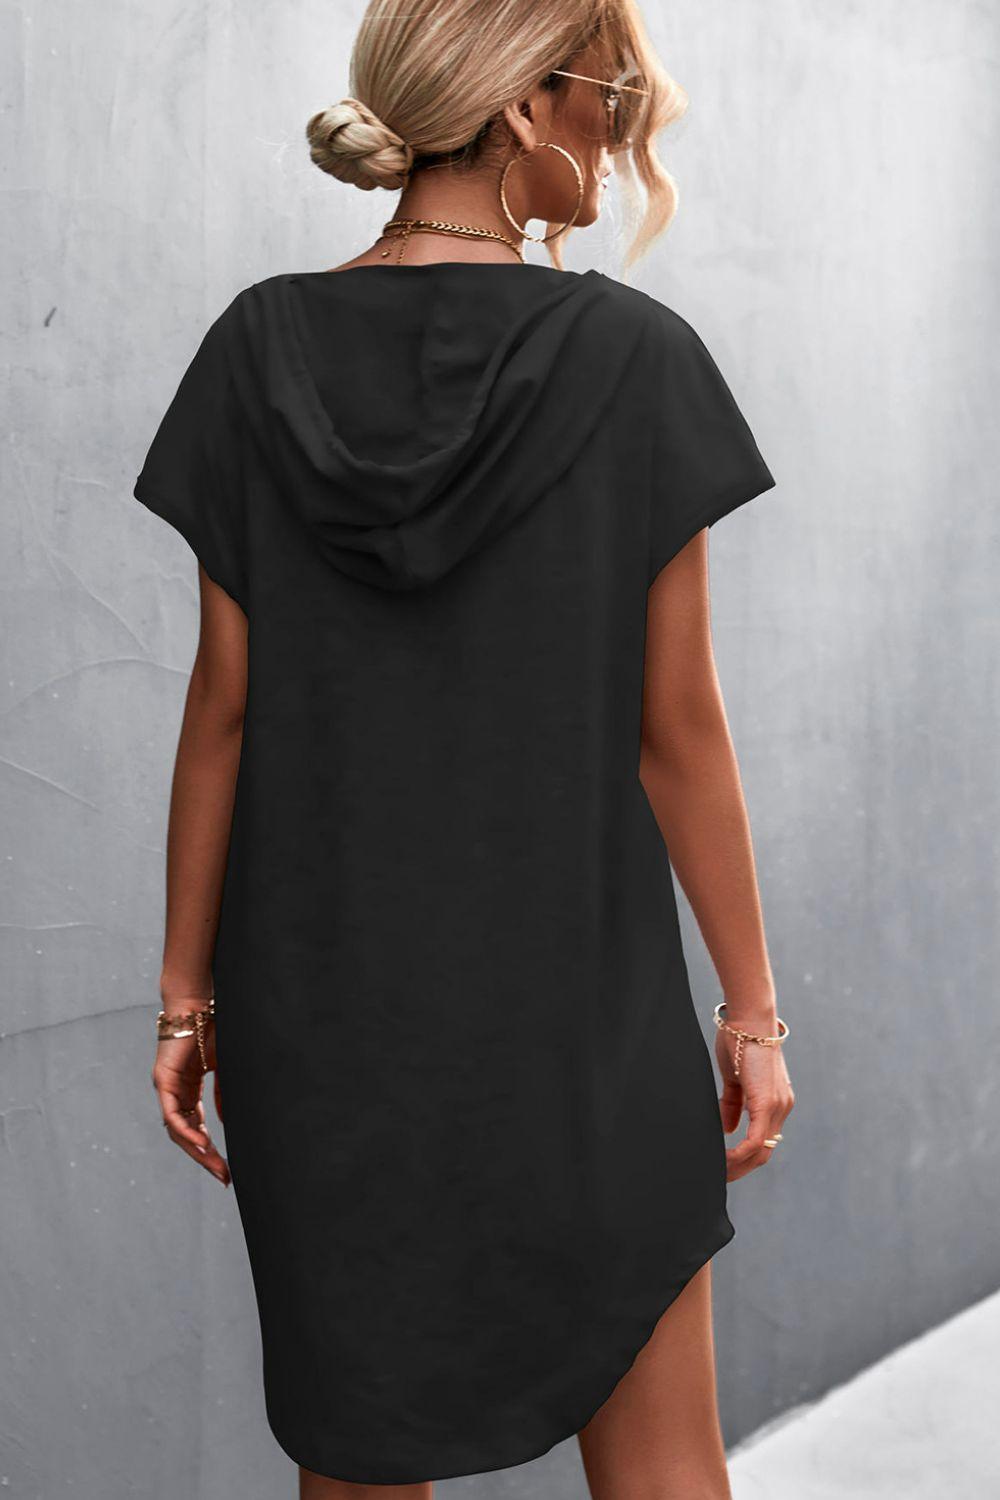 Adventurous Short Sleeve Hooded Dress - MXSTUDIO.COM